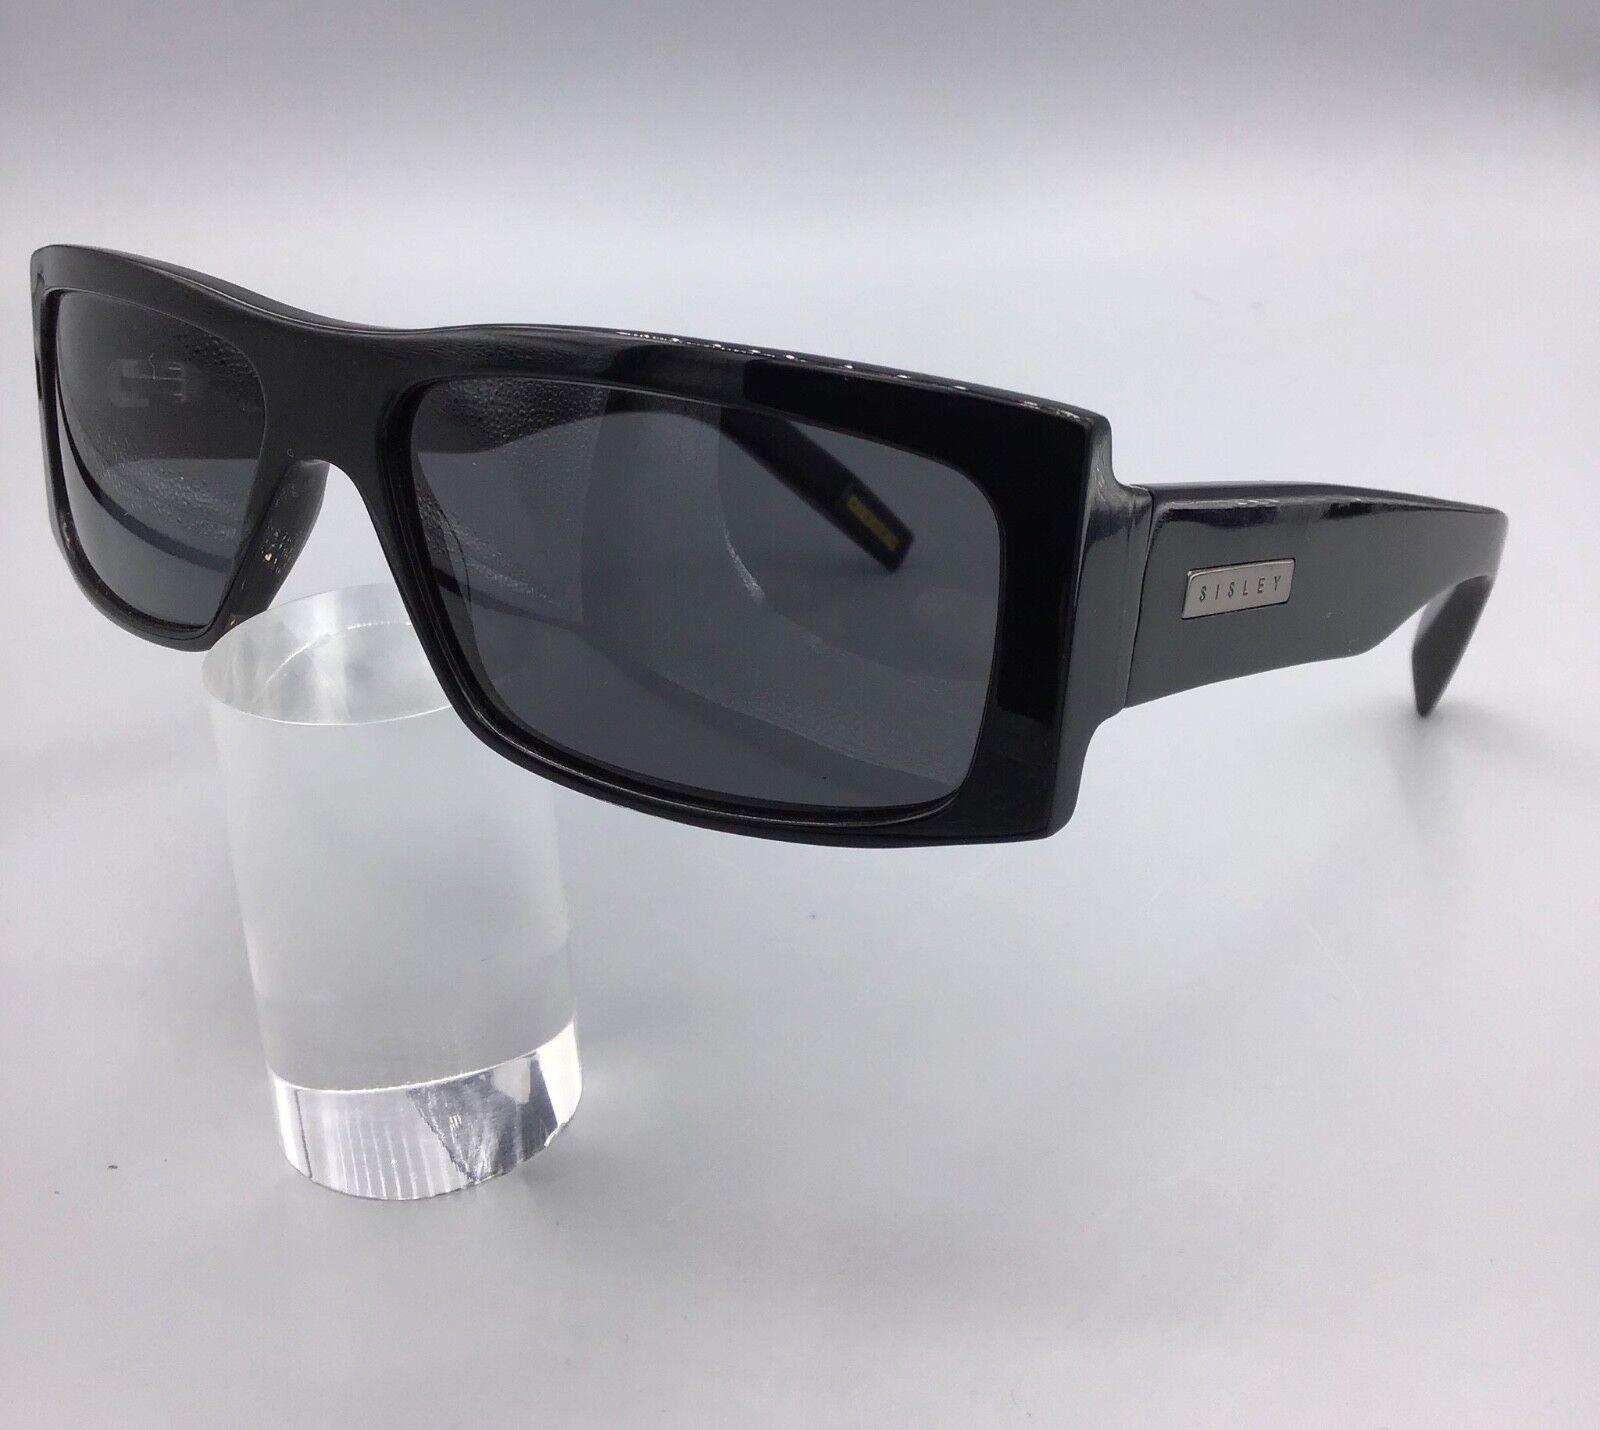 Sisley occhiale da sole SLY619 N00 Sunglasses sonnenbrillen lunettes